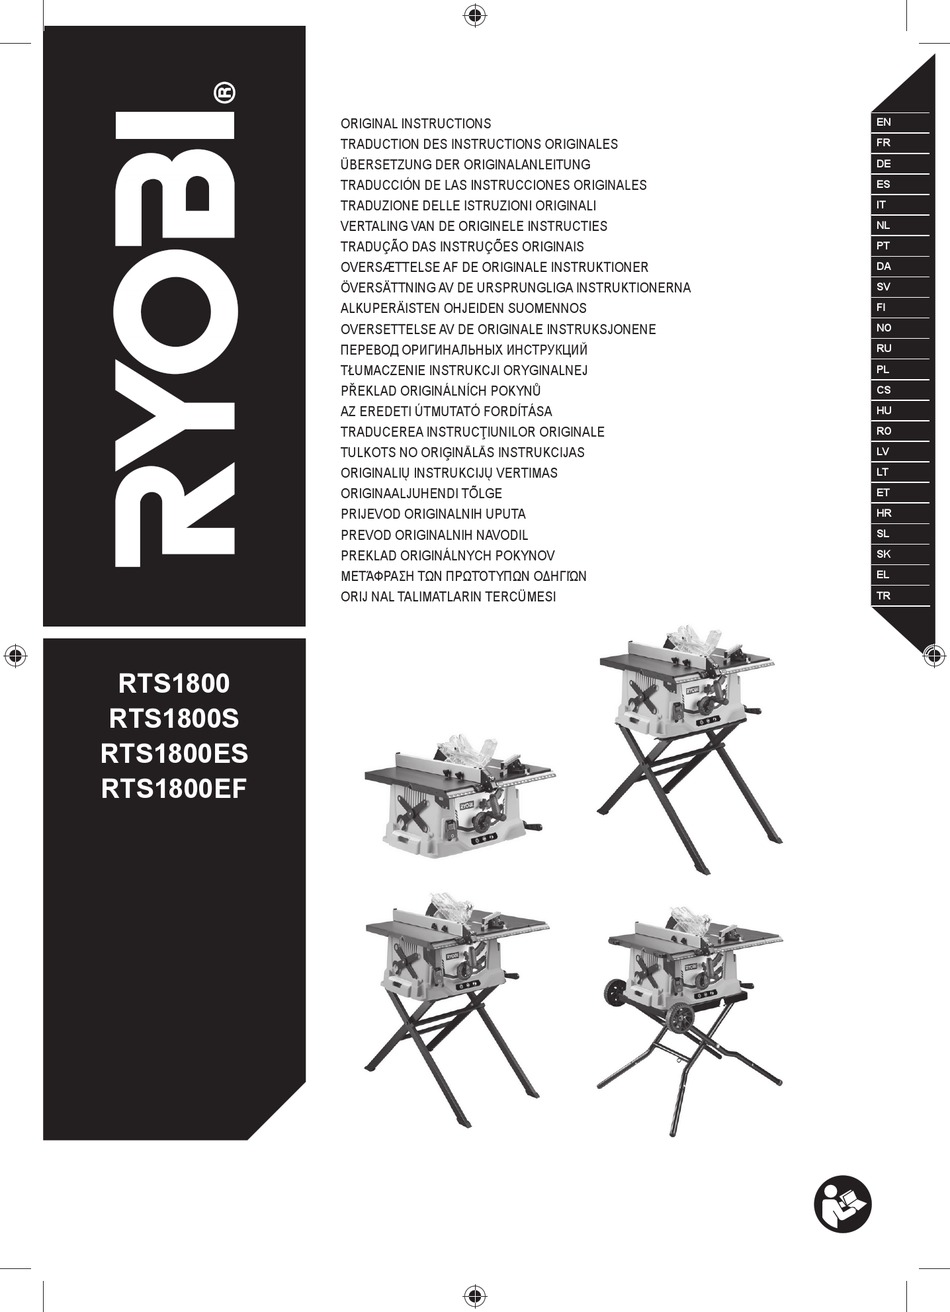 RYOBI RTS1800 ORIGINAL INSTRUCTIONS MANUAL Pdf Download | ManualsLib